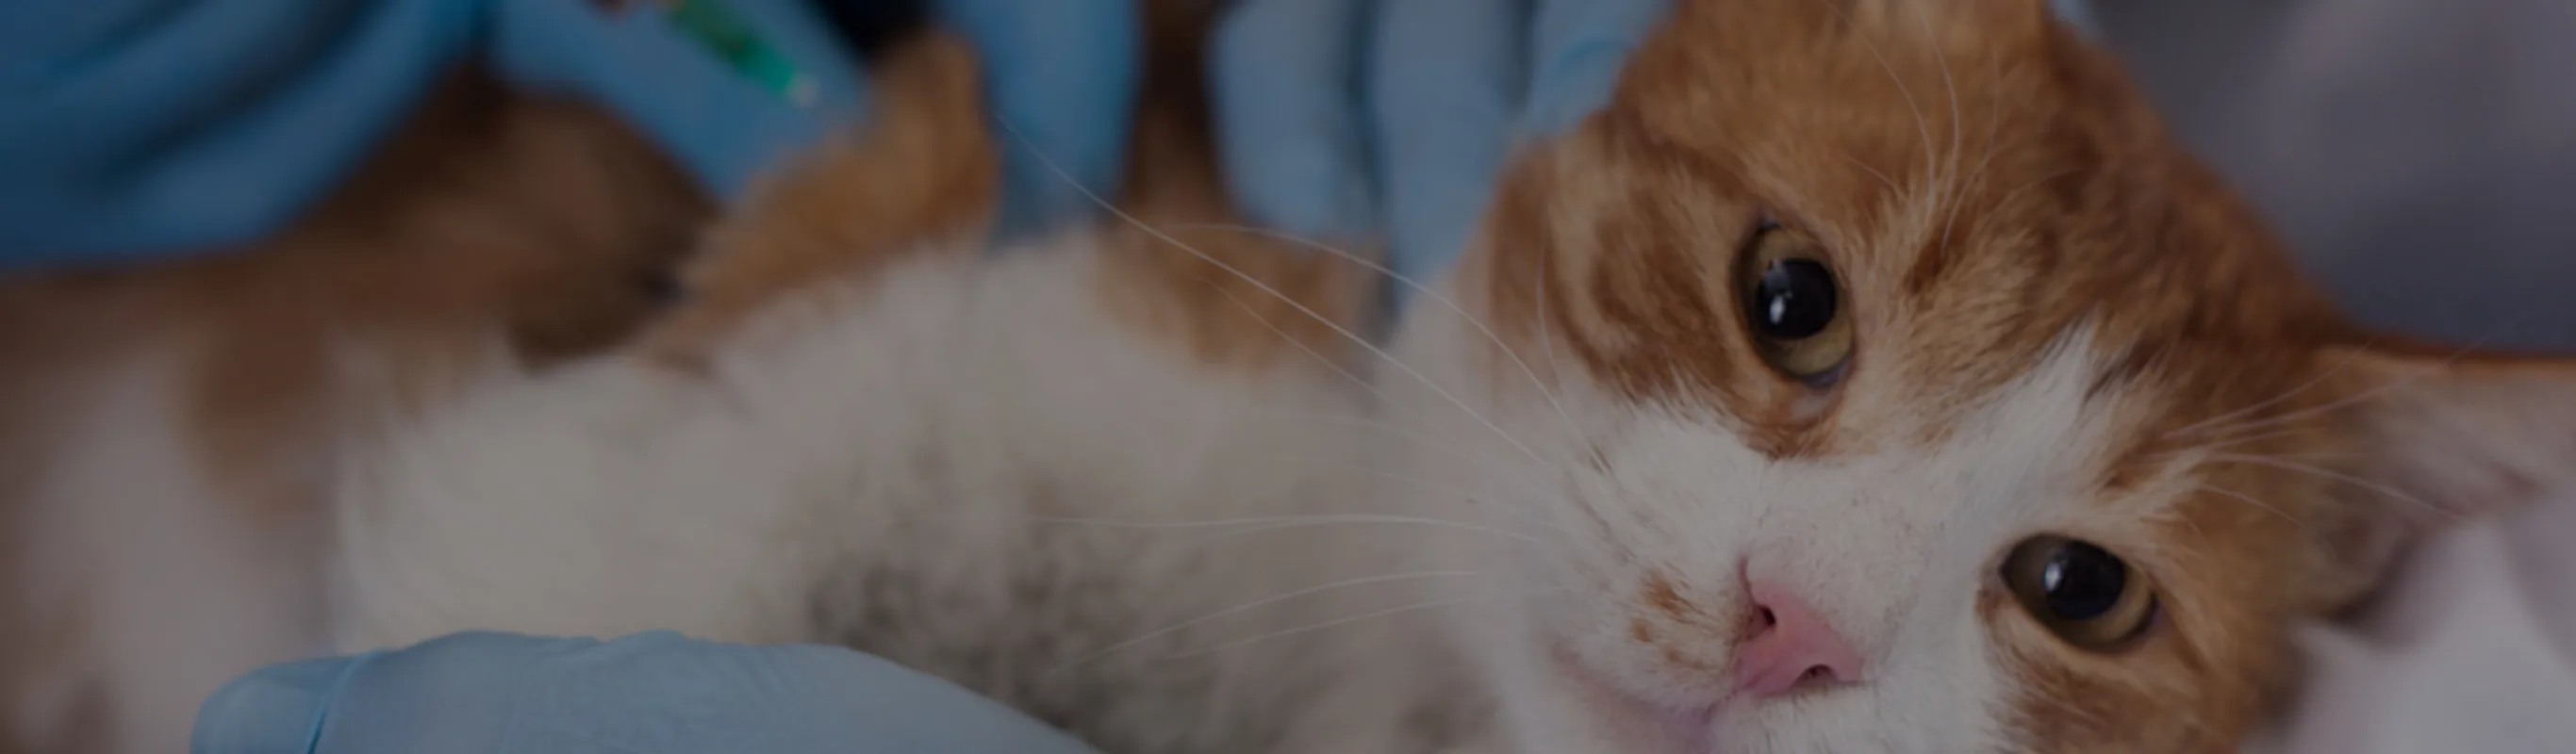 Orange & white cat receiving iodine therapy